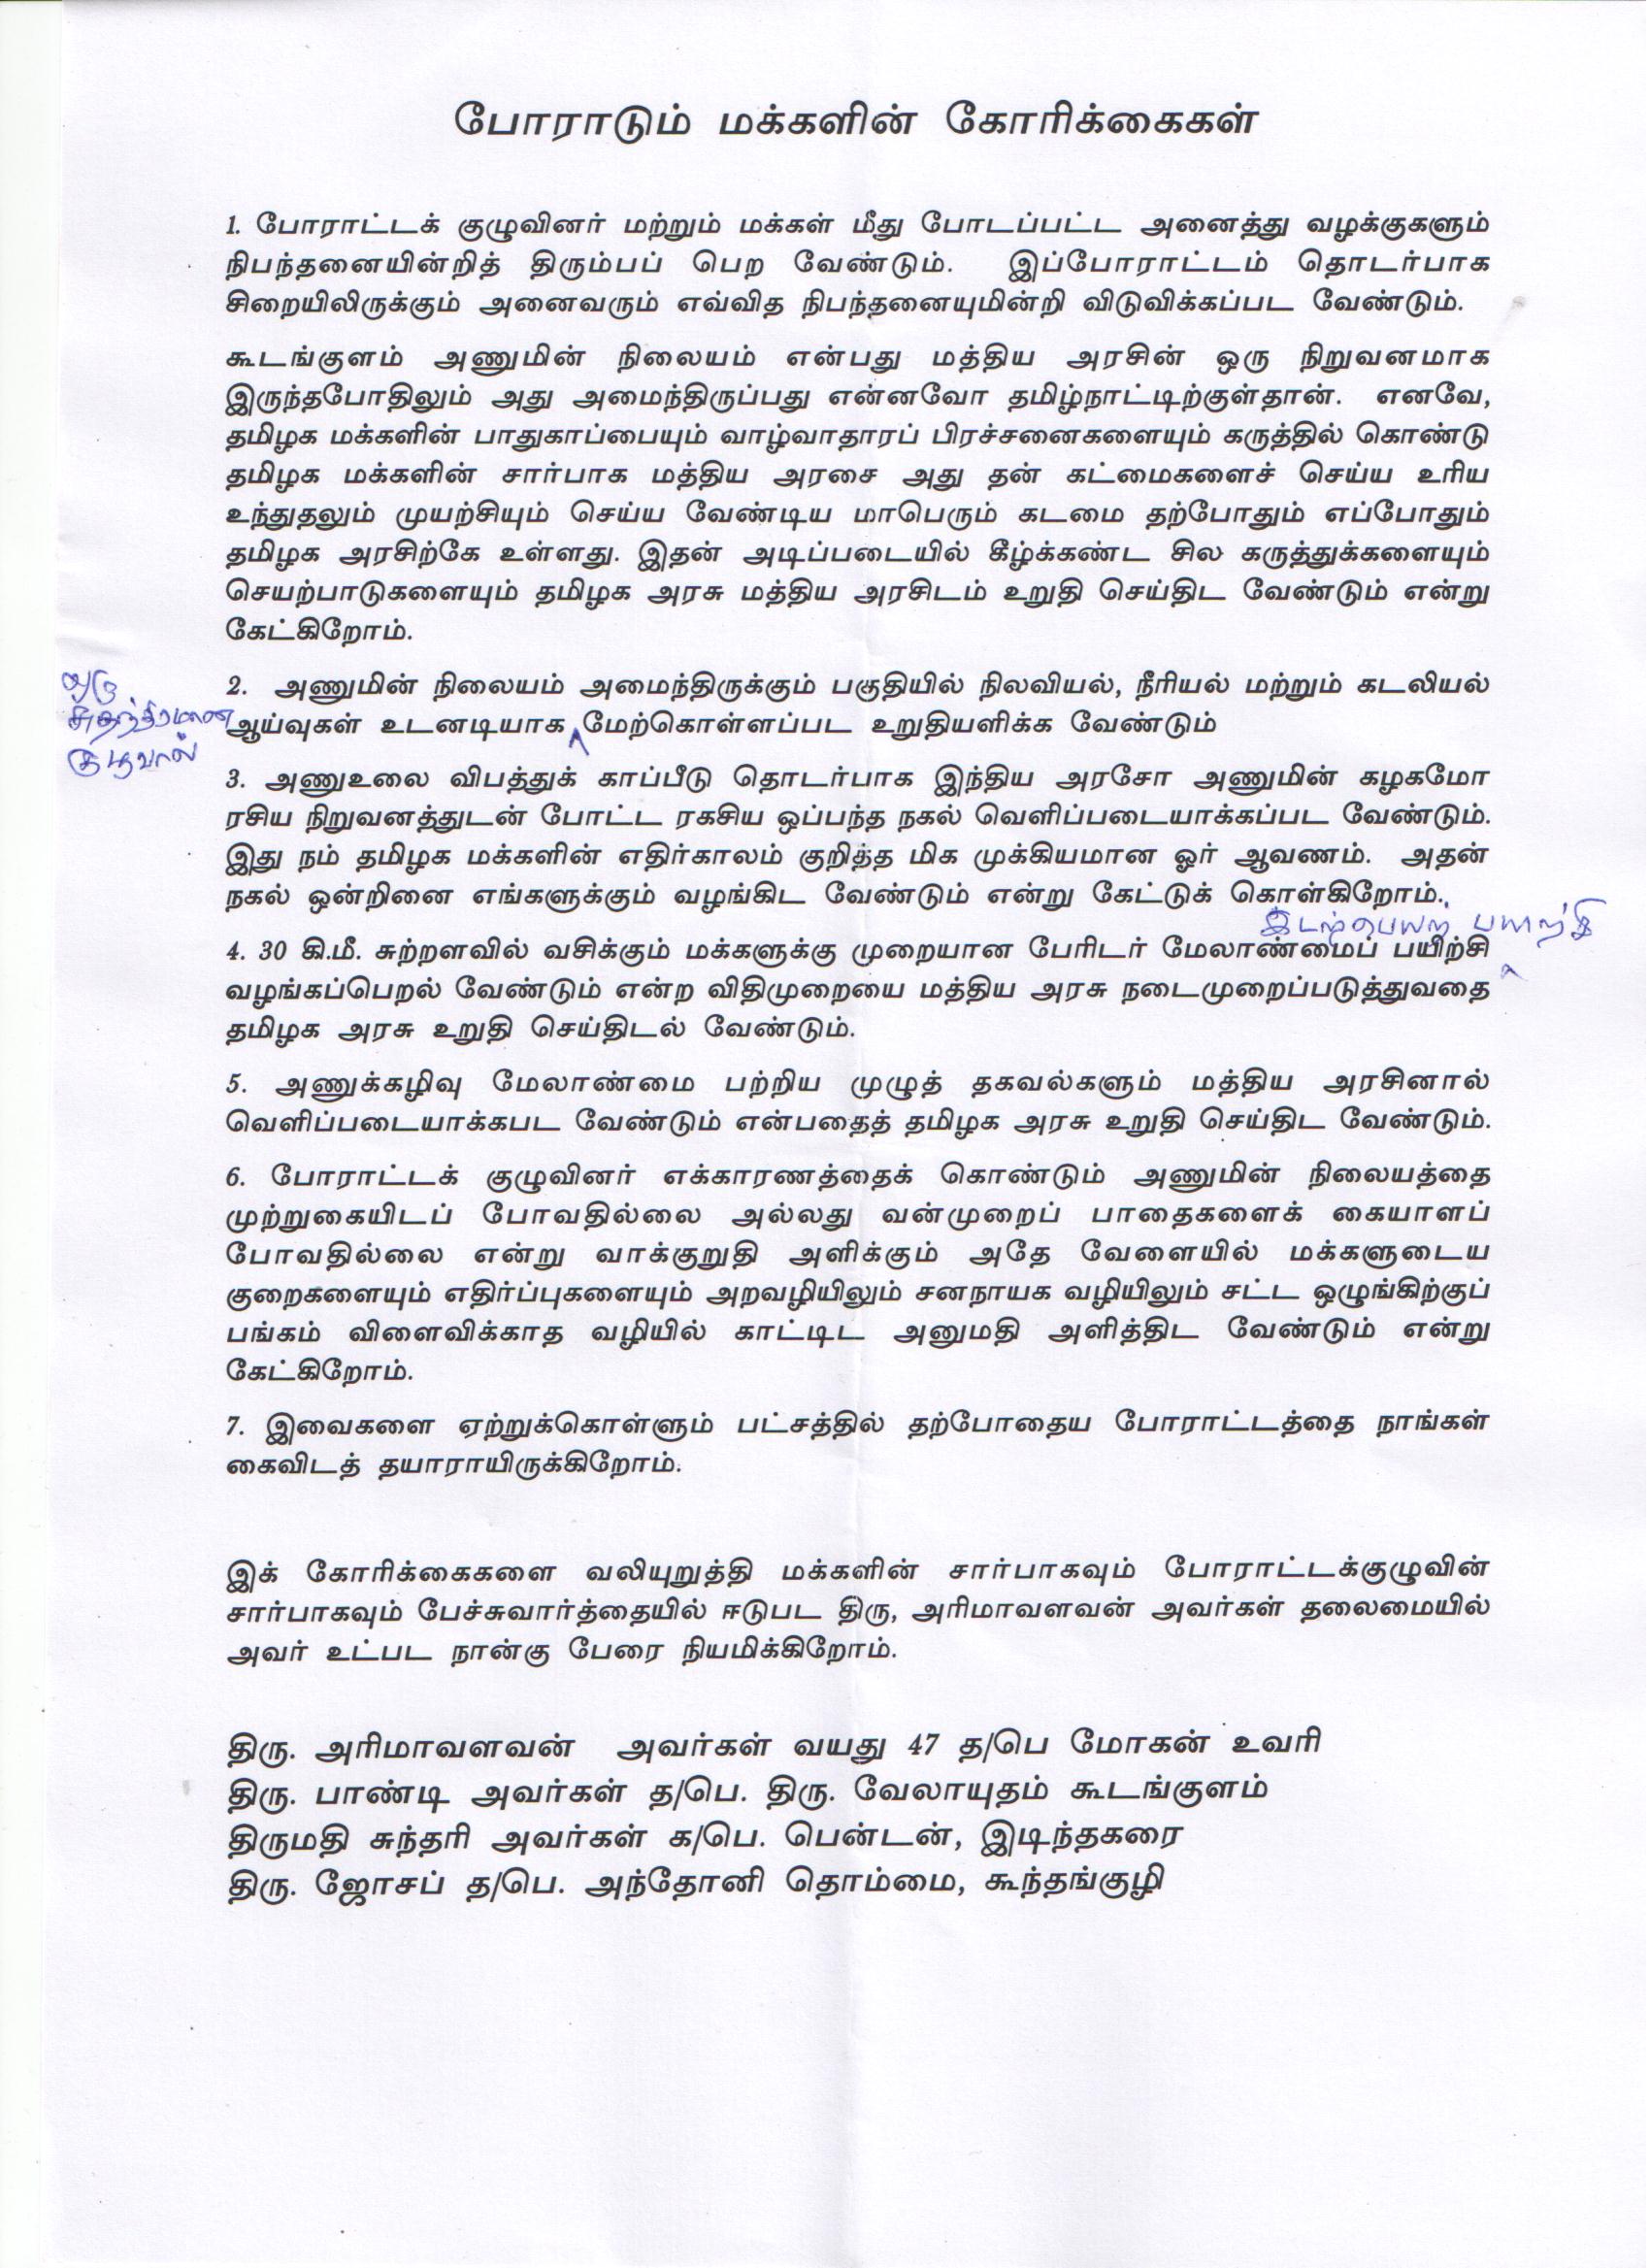 Original Document of demands in Tamil